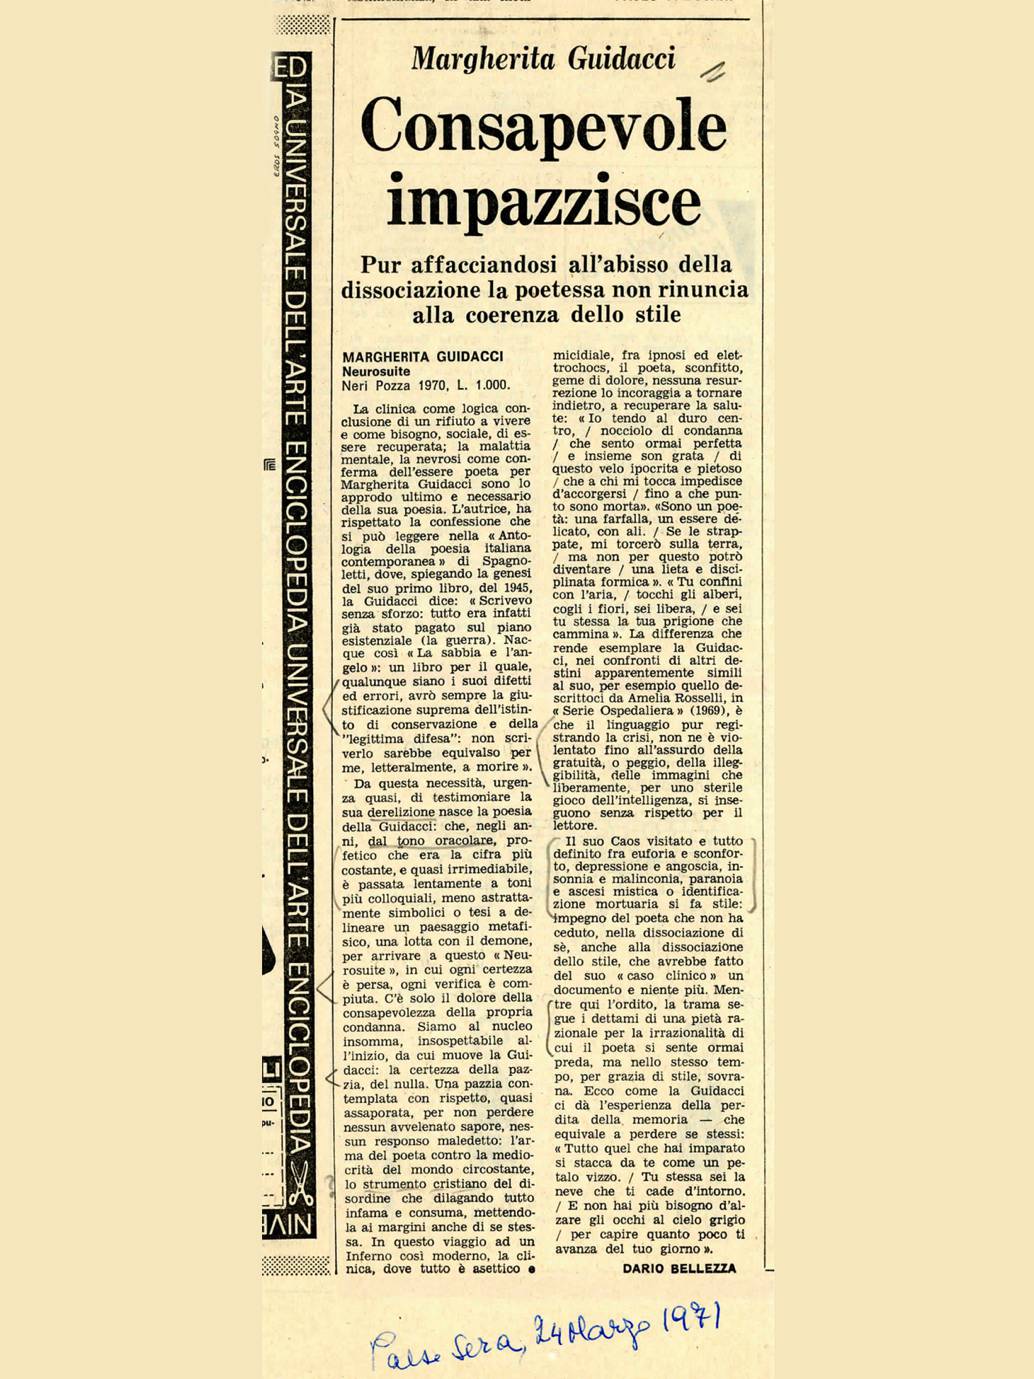 Critica Dario Bellezza Neurosuite Paese Sera 1971